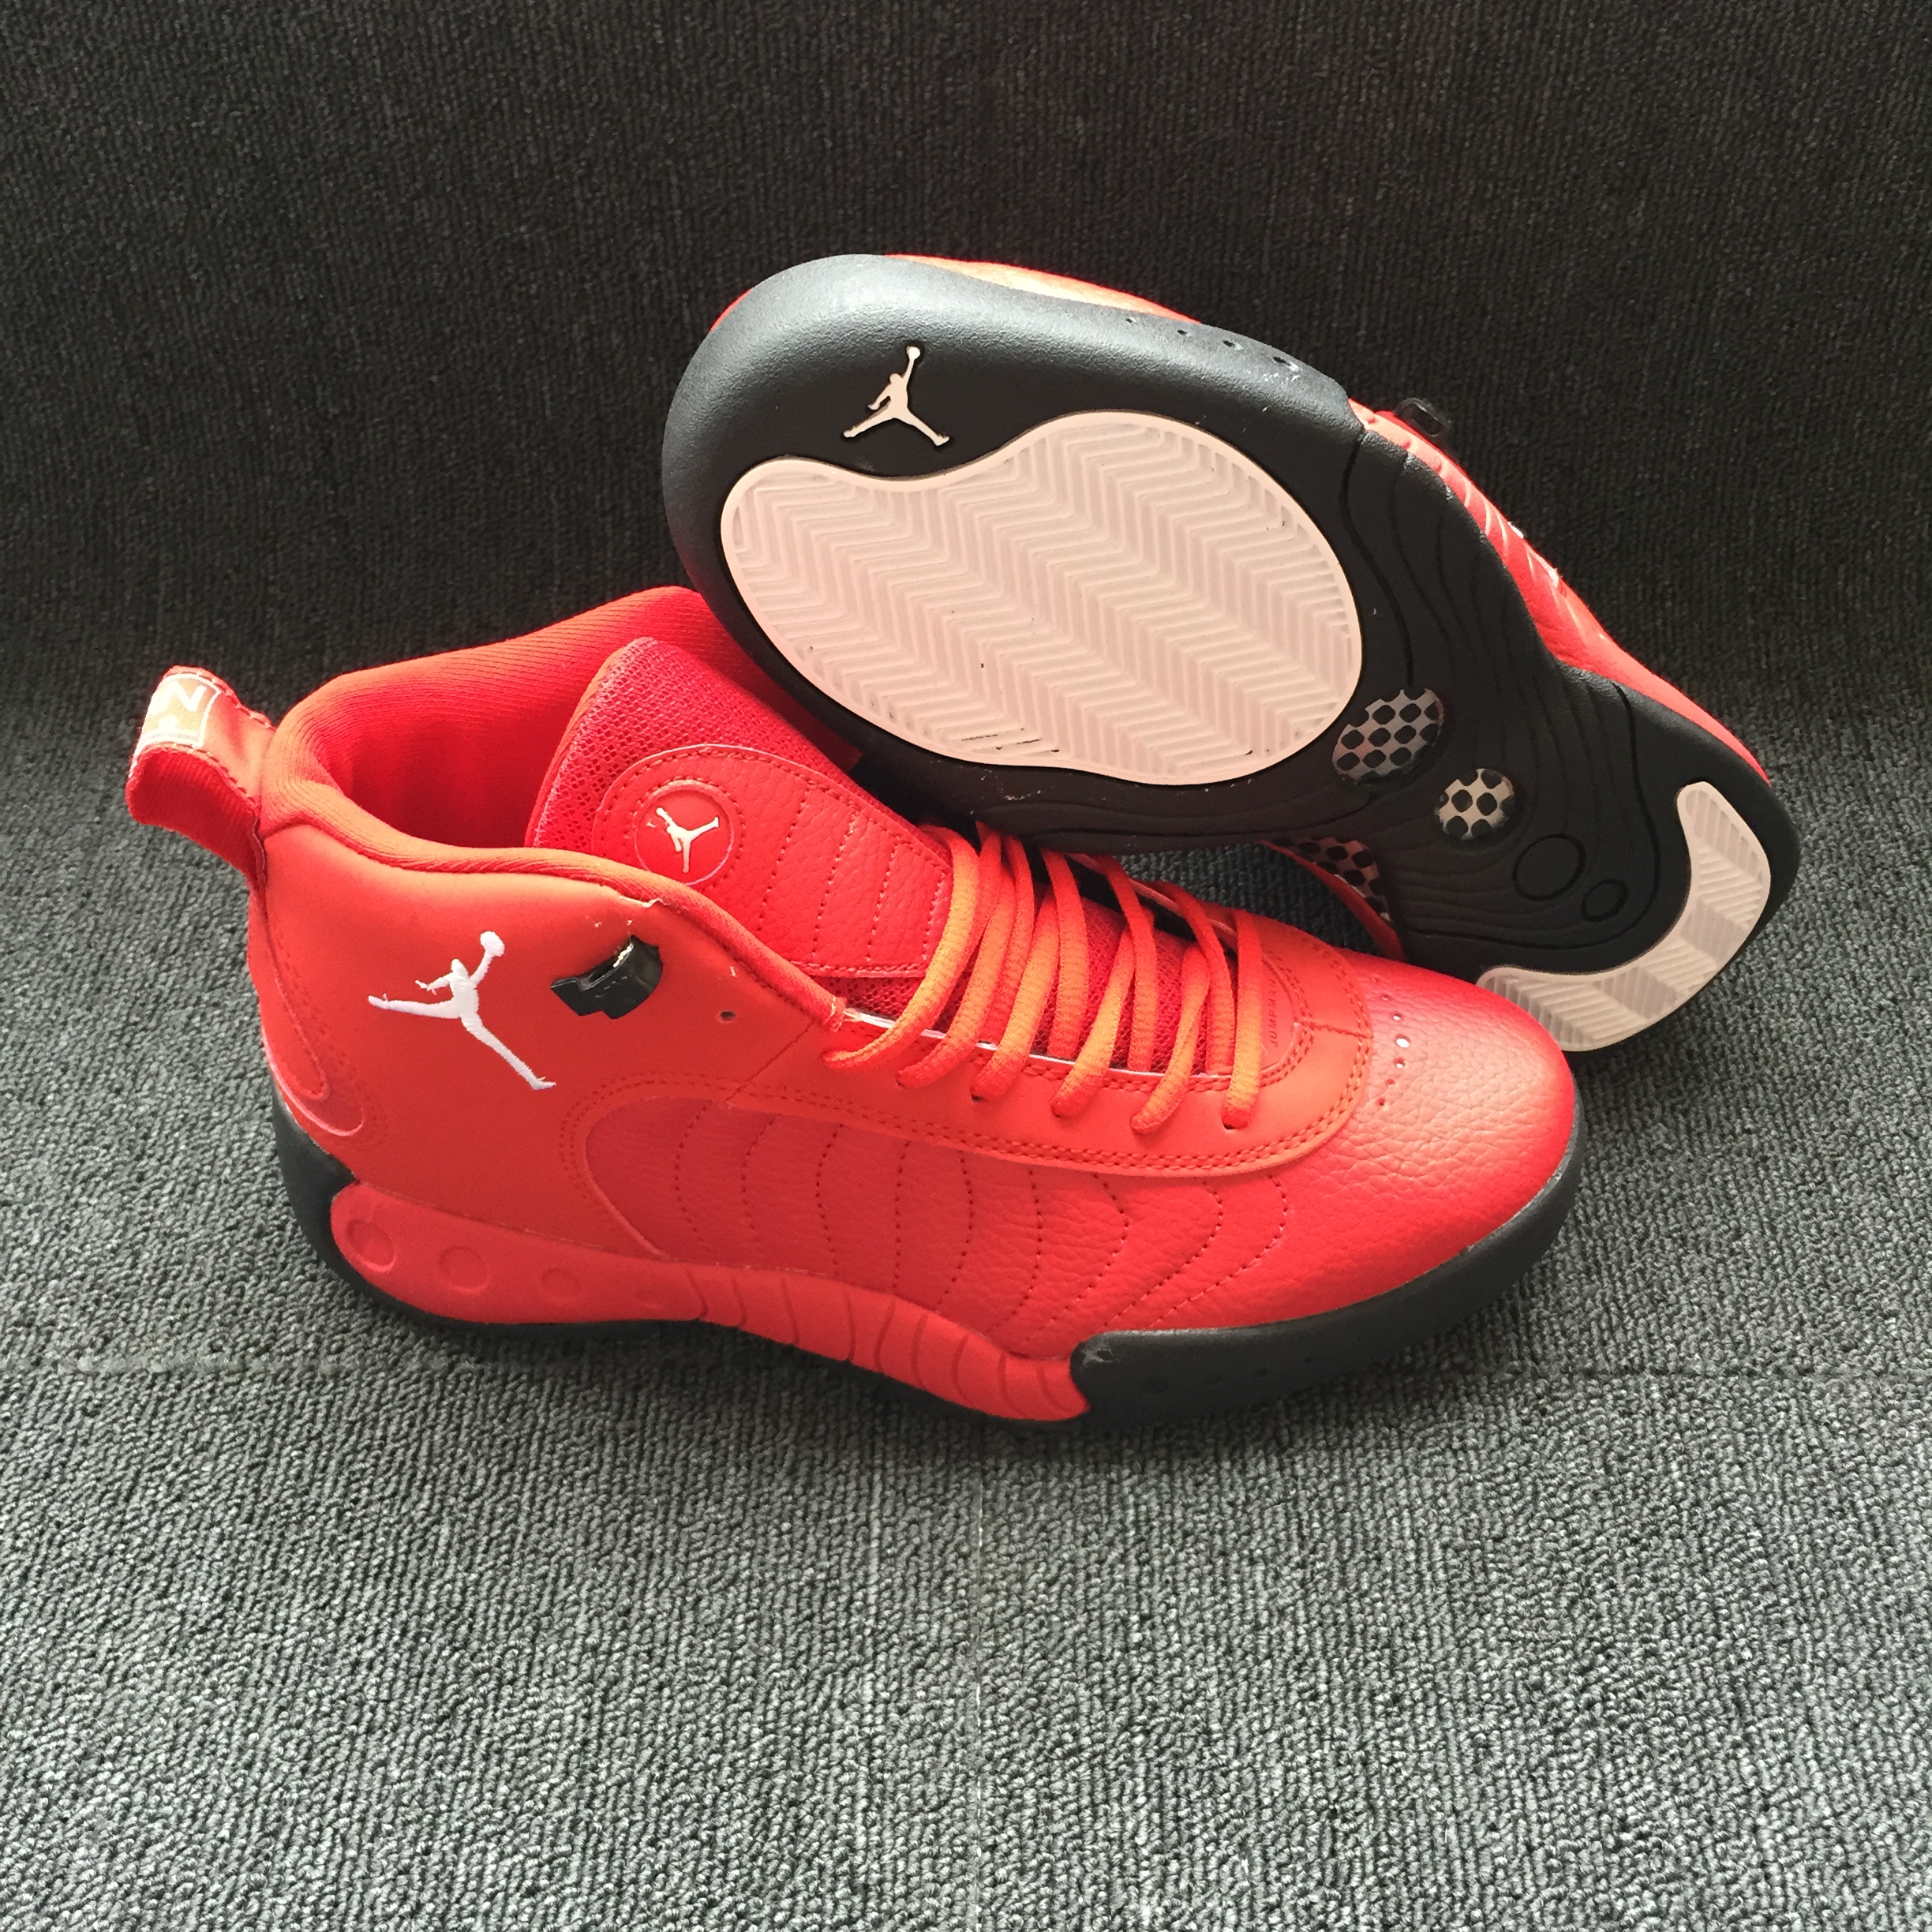 New Air Jordan 12.5 Red Black Shoes - Click Image to Close